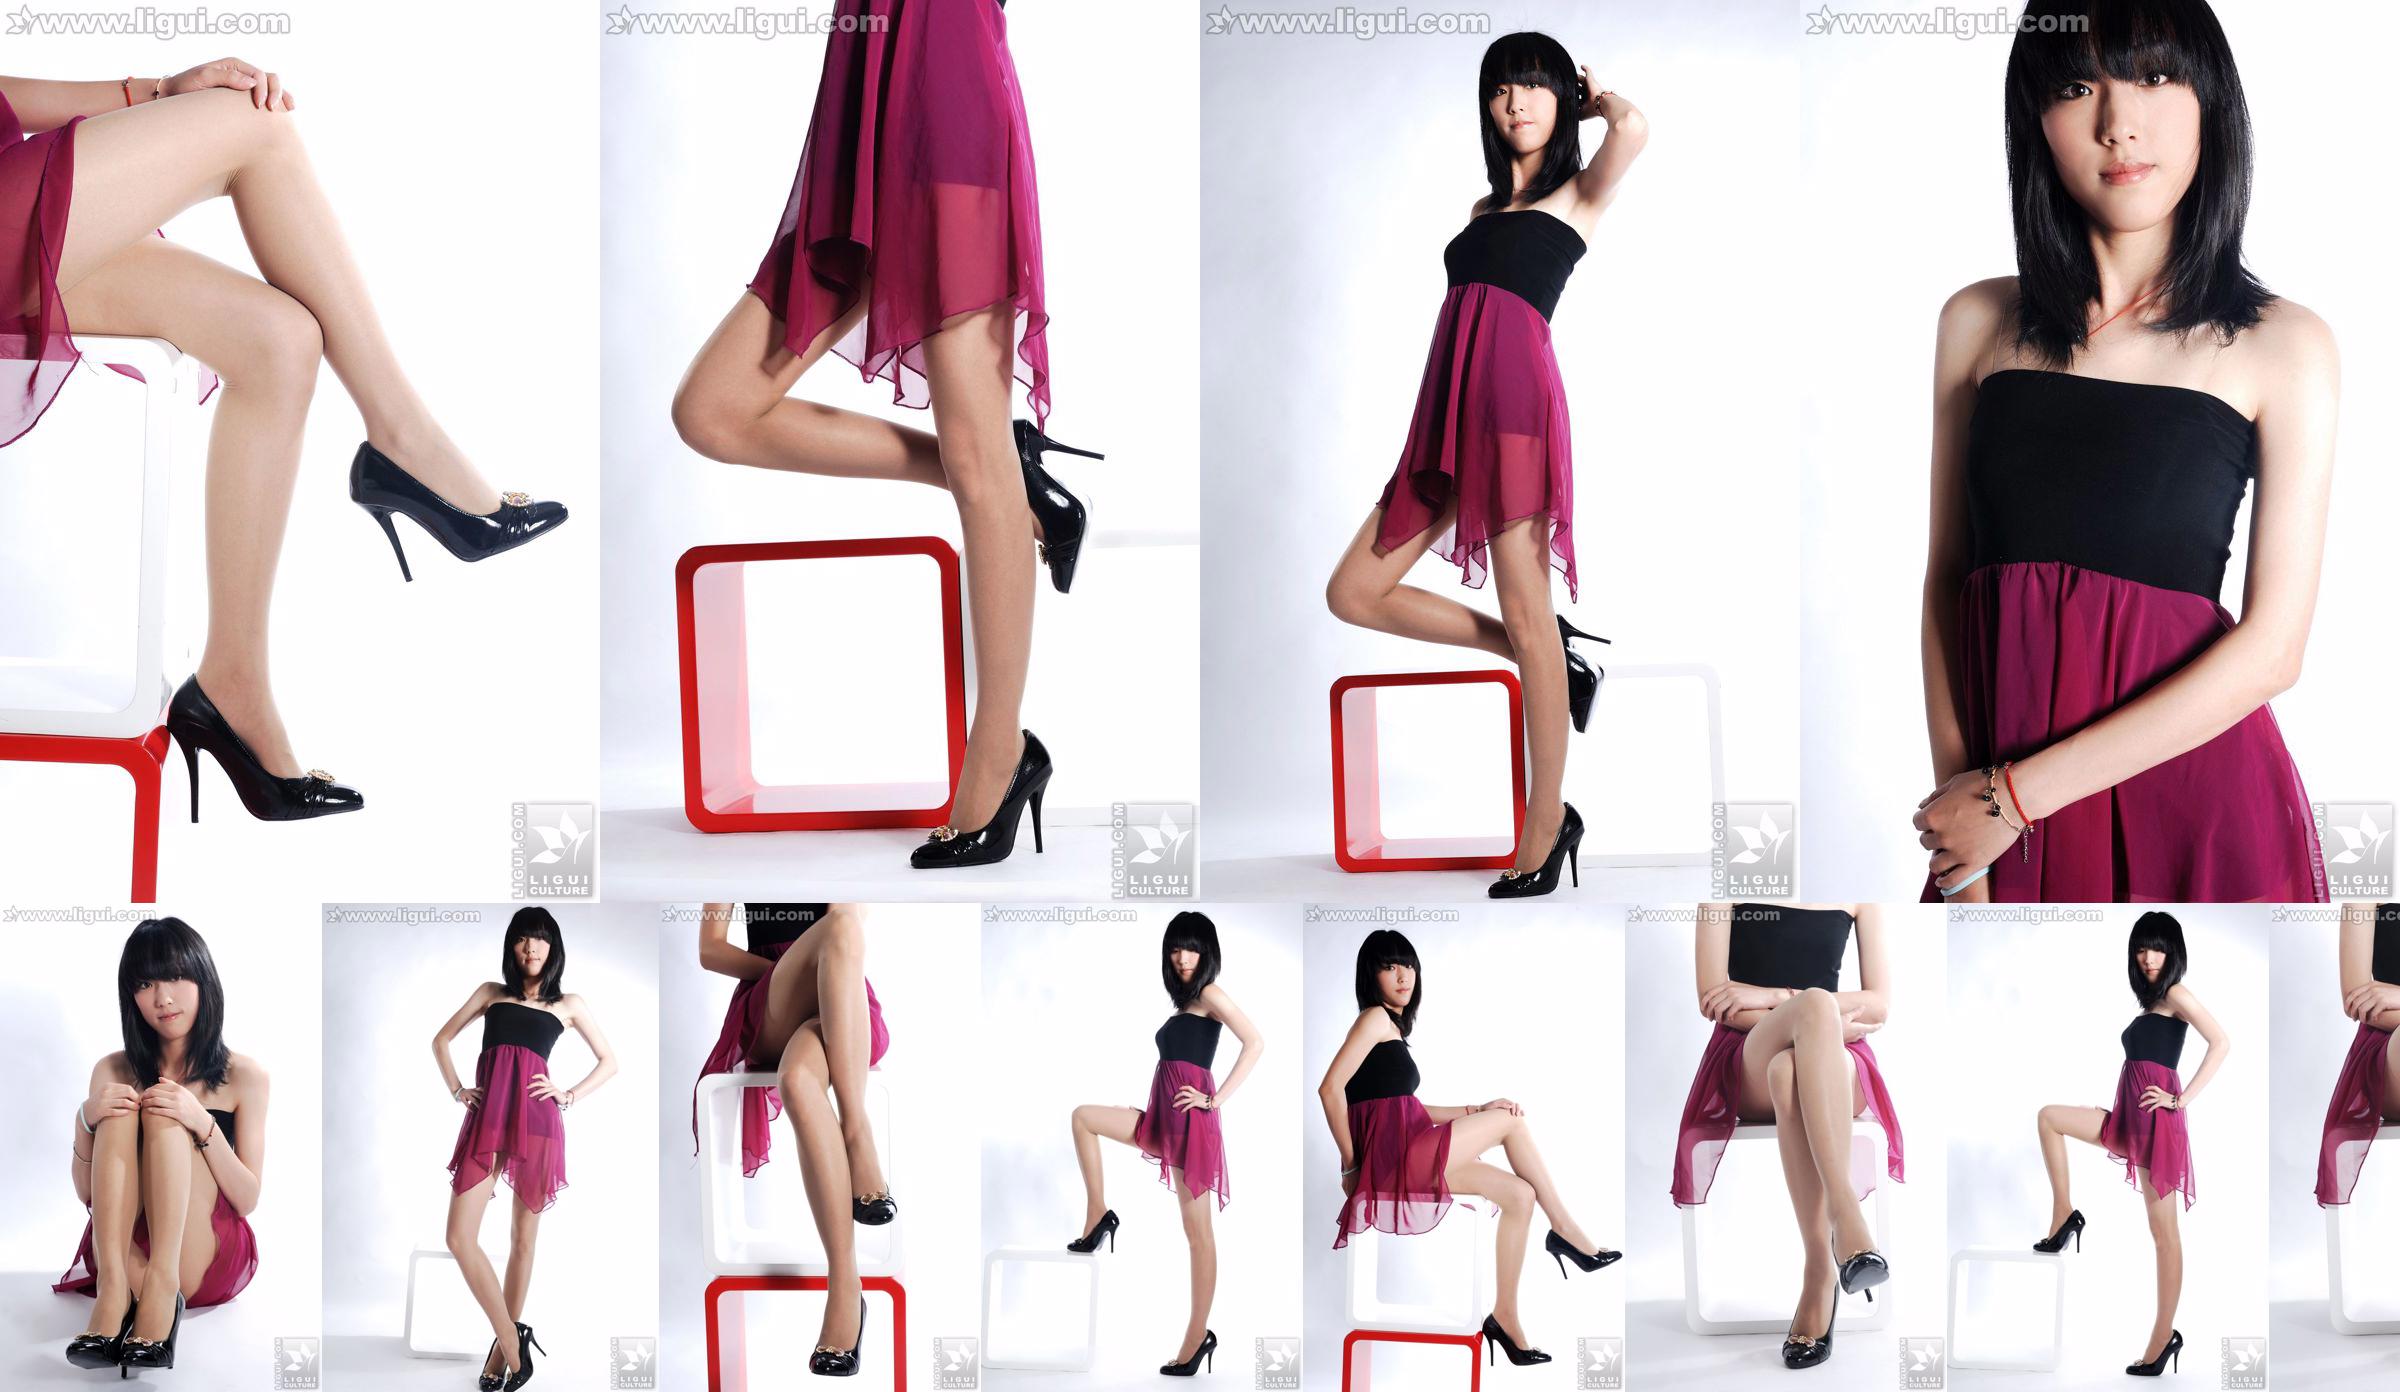 Modèle Lu Yingmei "Top Visual High-heeled Blockbuster" [丽 柜 LiGui] Photo de belles jambes et pieds de jade No.20452e Page 1